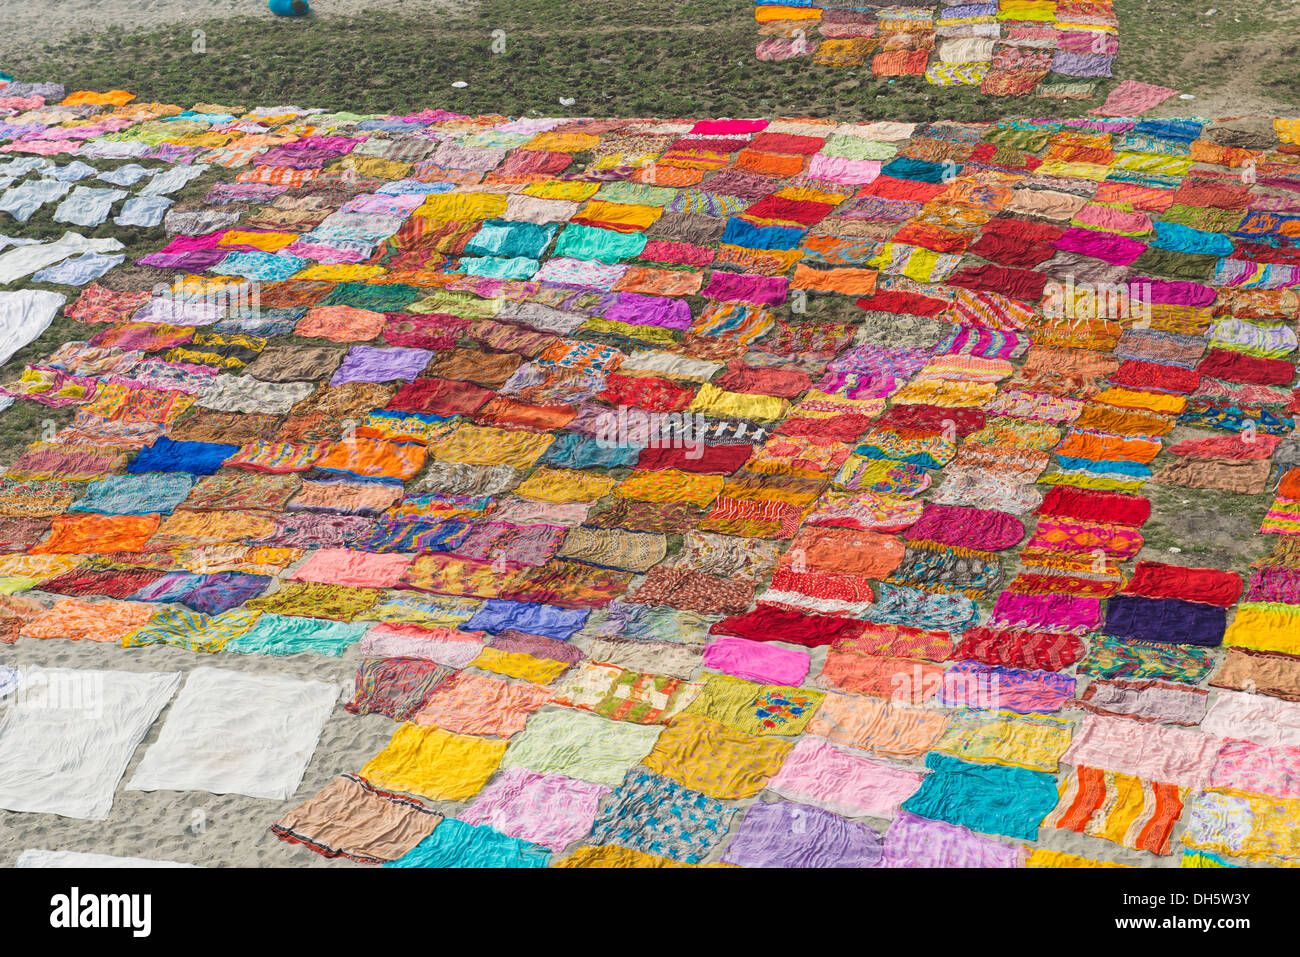 Colourful saris laying to dry after washing on a sandbank on the banks of the Yamuna River, Yamuna, Agra, Uttar Pradesh, India Stock Photo